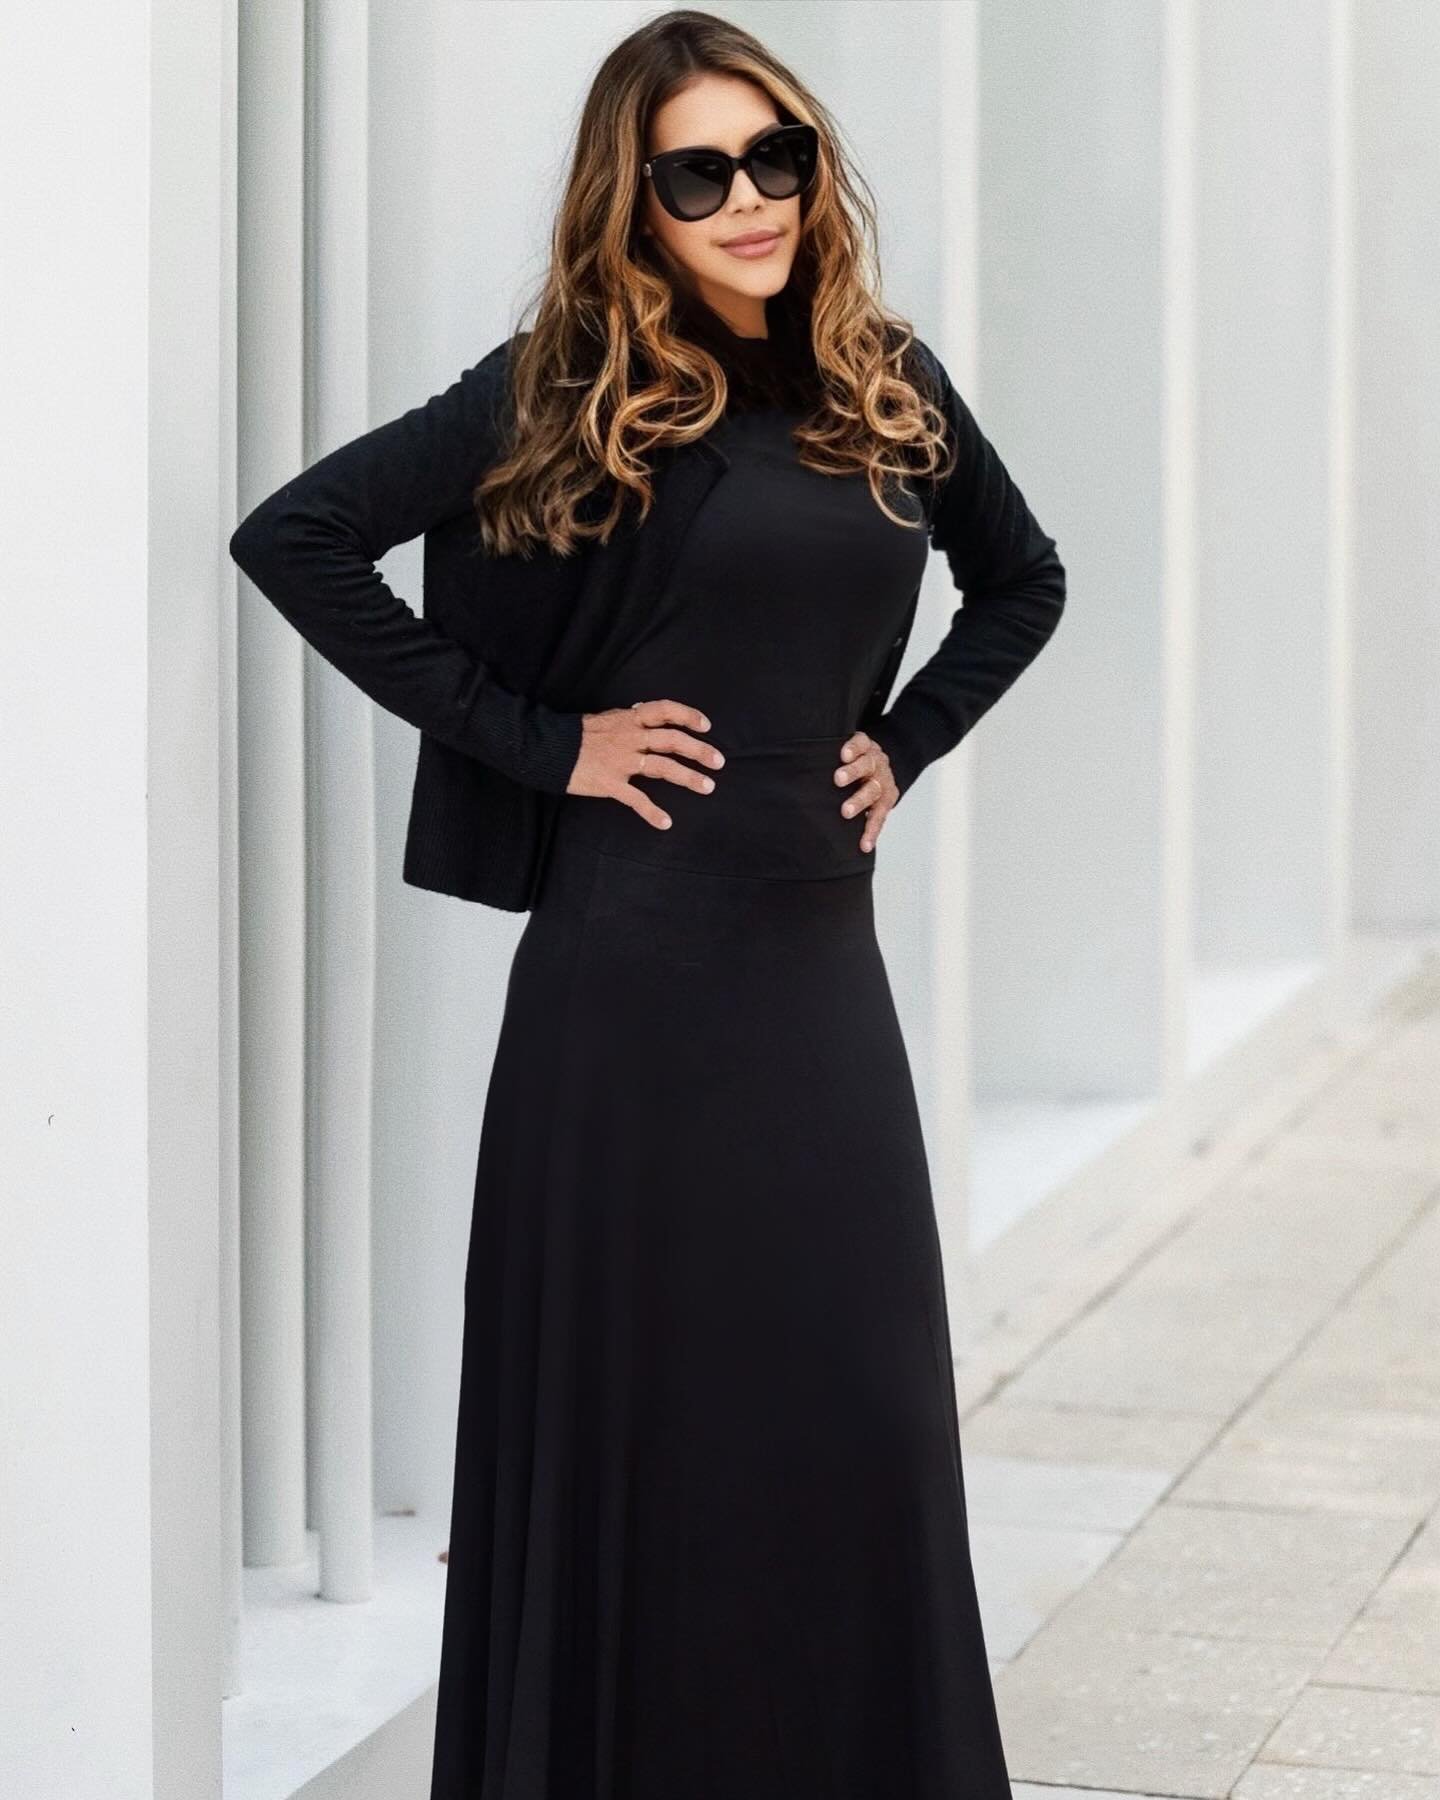 Embracing the elegance of black in this stunning @kalrieman ensemble. ✨ #BlackIsTimeless #KalRieman #EleganceInEveryStitch